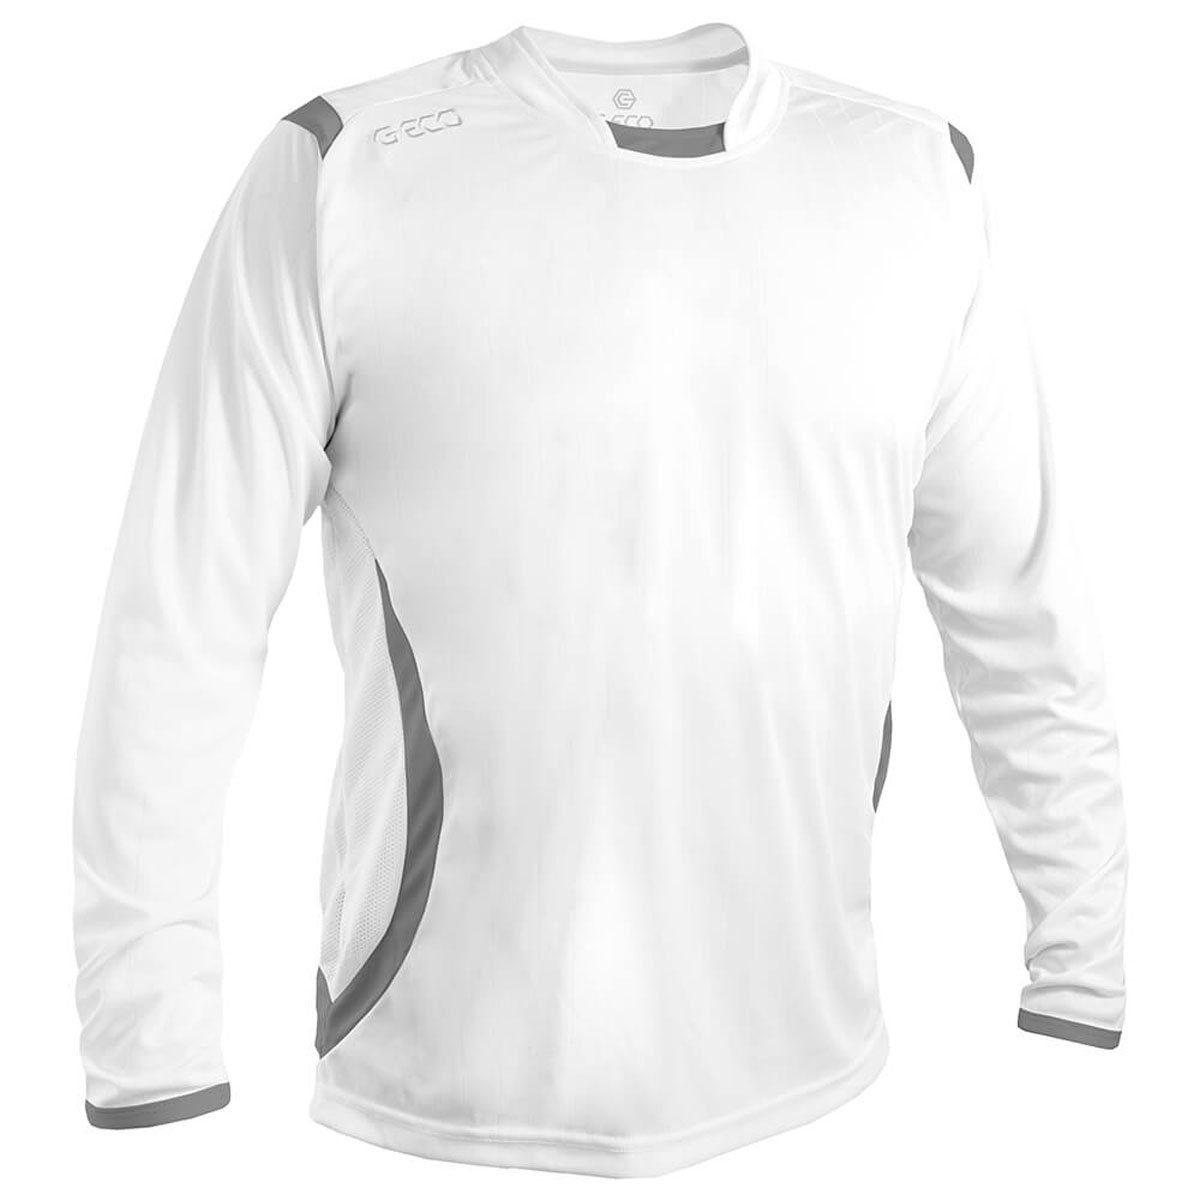 Geco Sportswear zweifarbig Trikot langarm weiß/silber Fußball Fußballtrikot Geco Levante